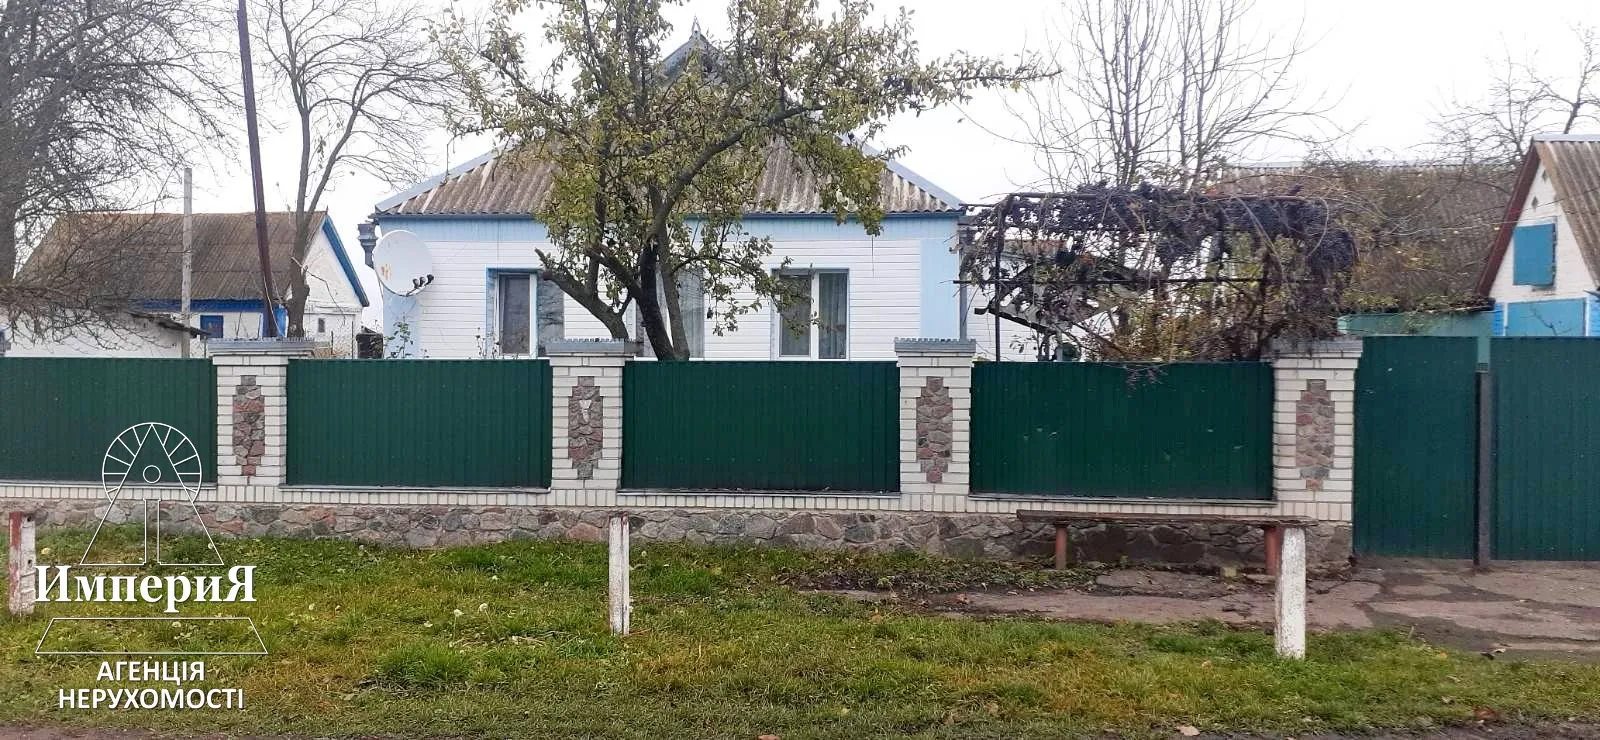 House for sale. Tarasivka. 